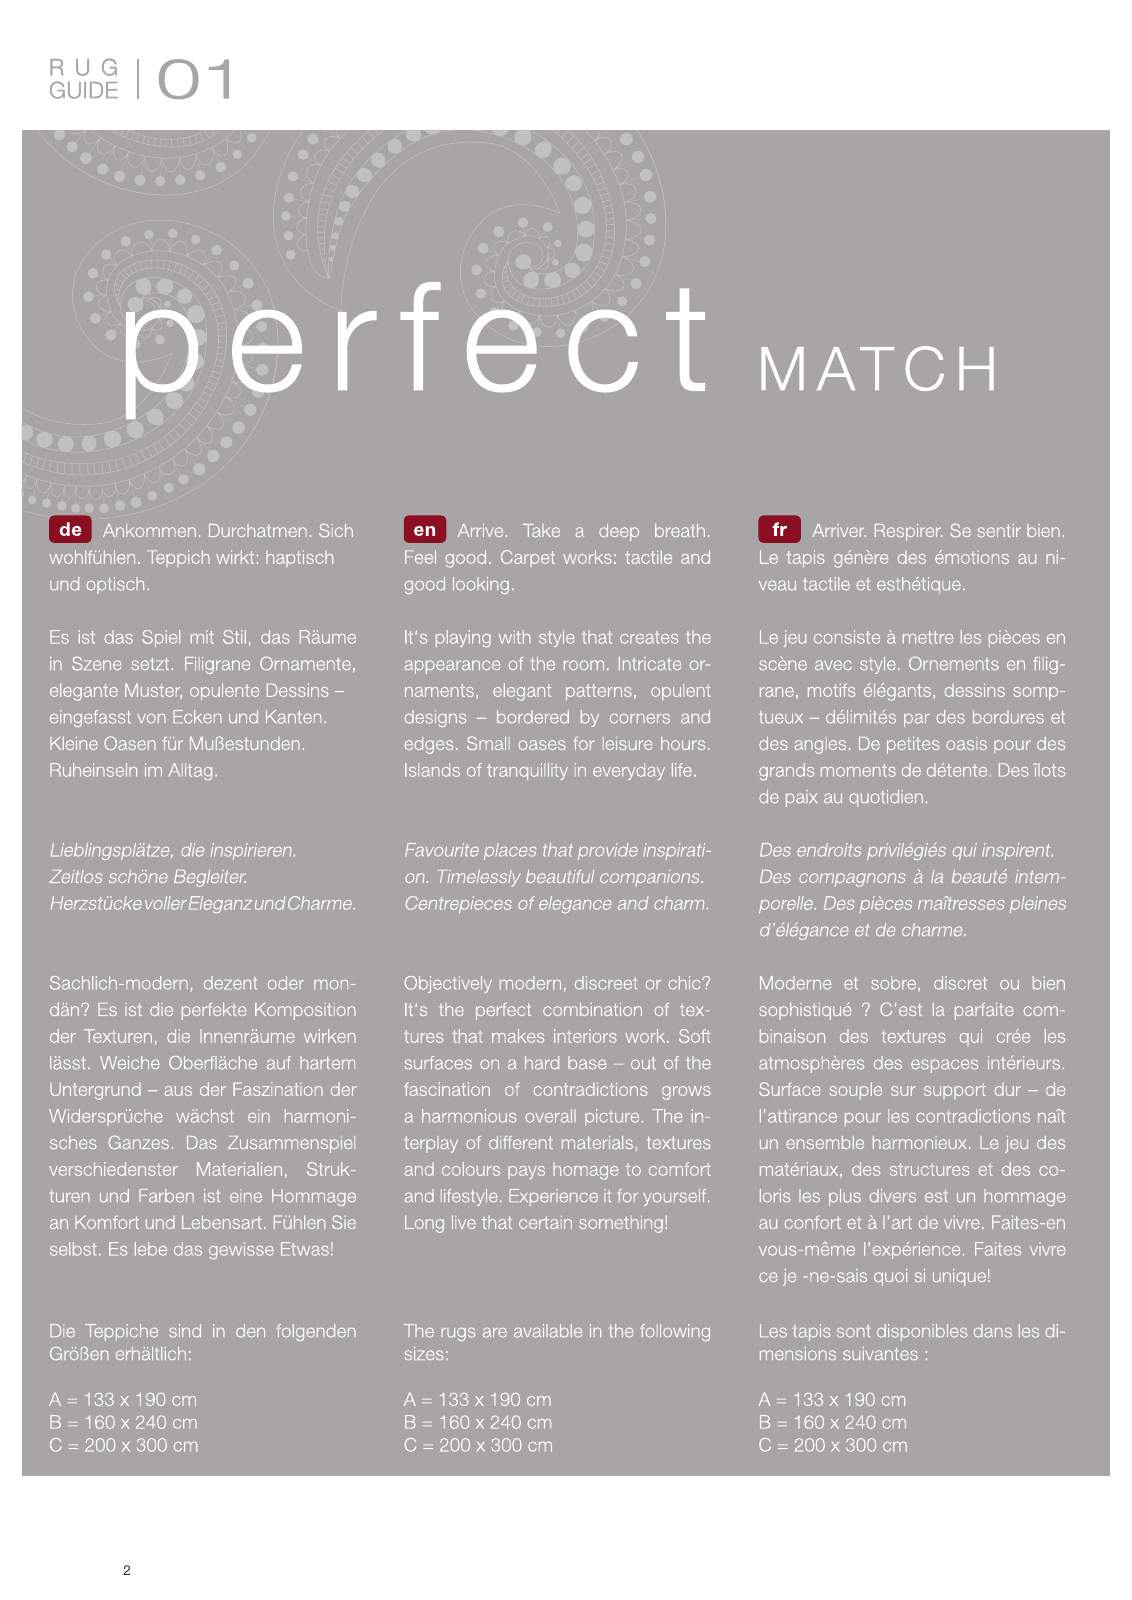 Vorschau Rug Guide perfect match Seite 2